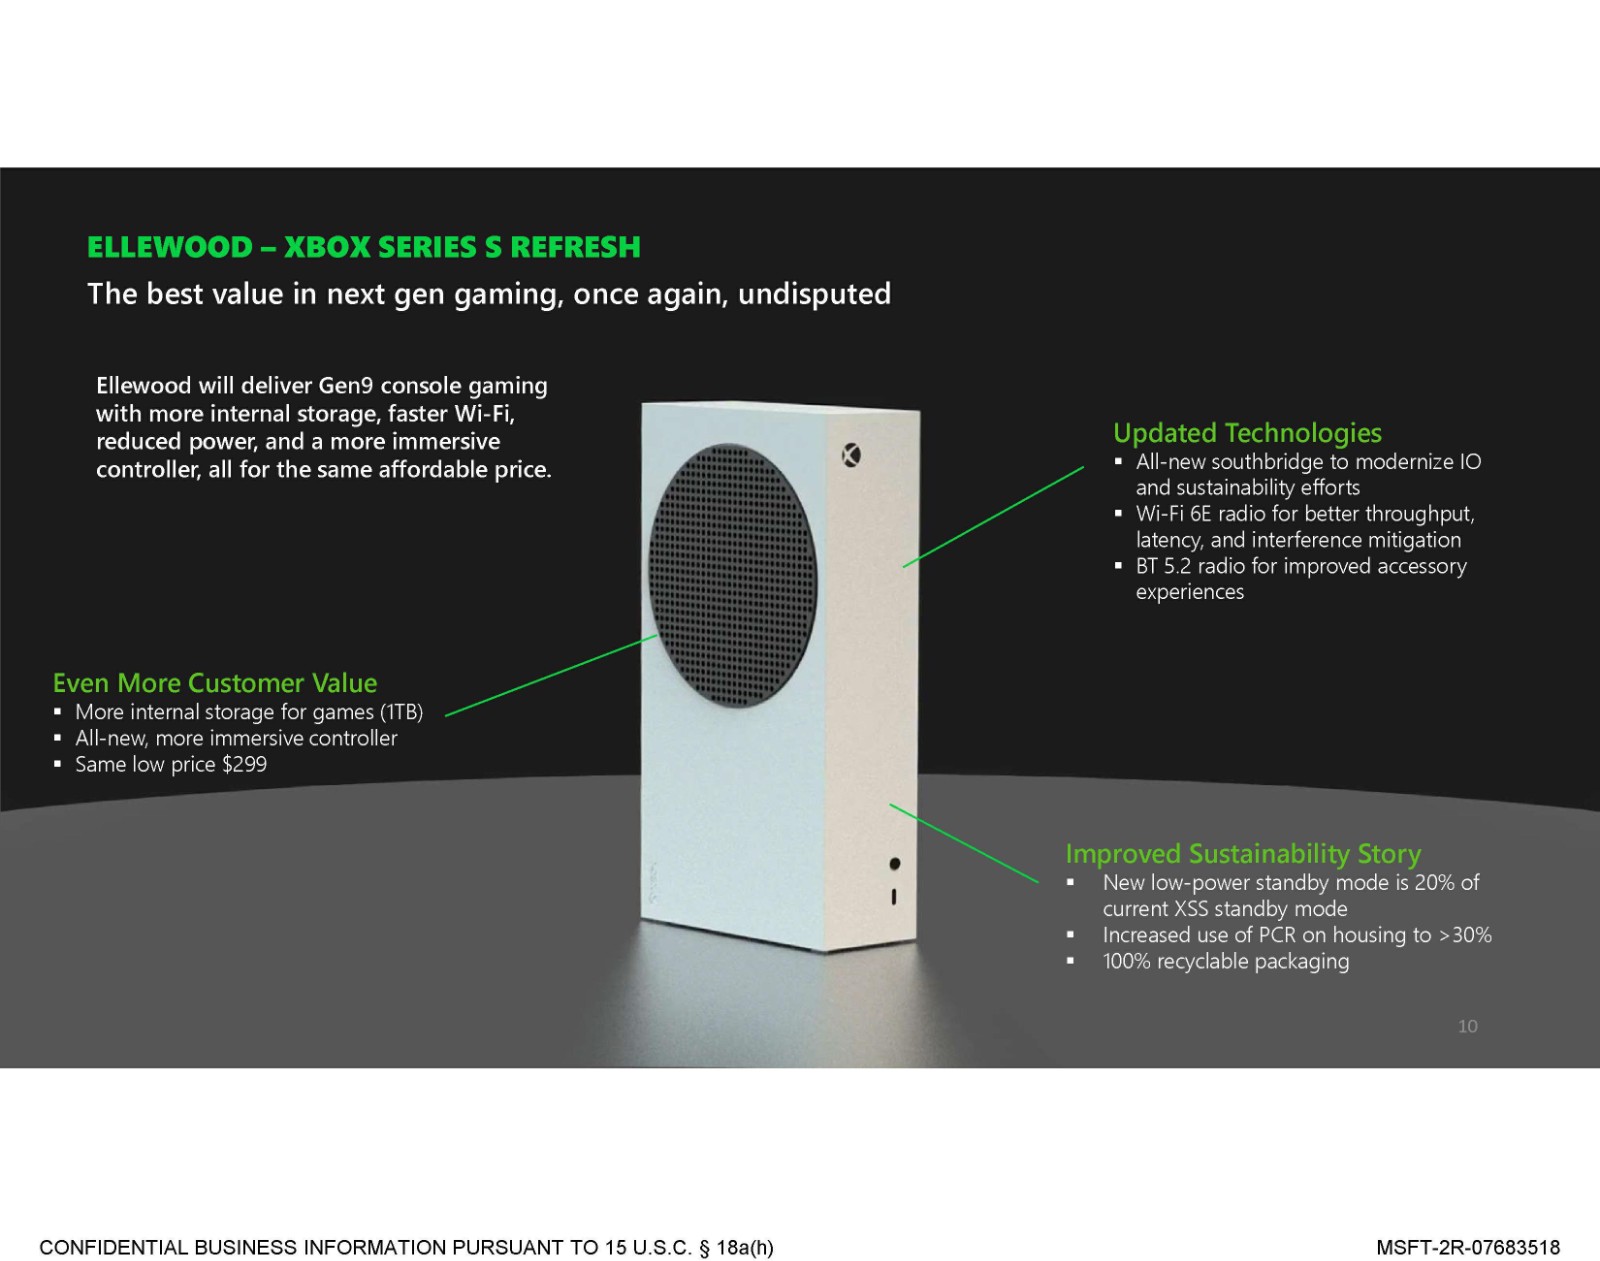 Xbox次世代主機確認 將是硬件世代中最大的技術飛躍